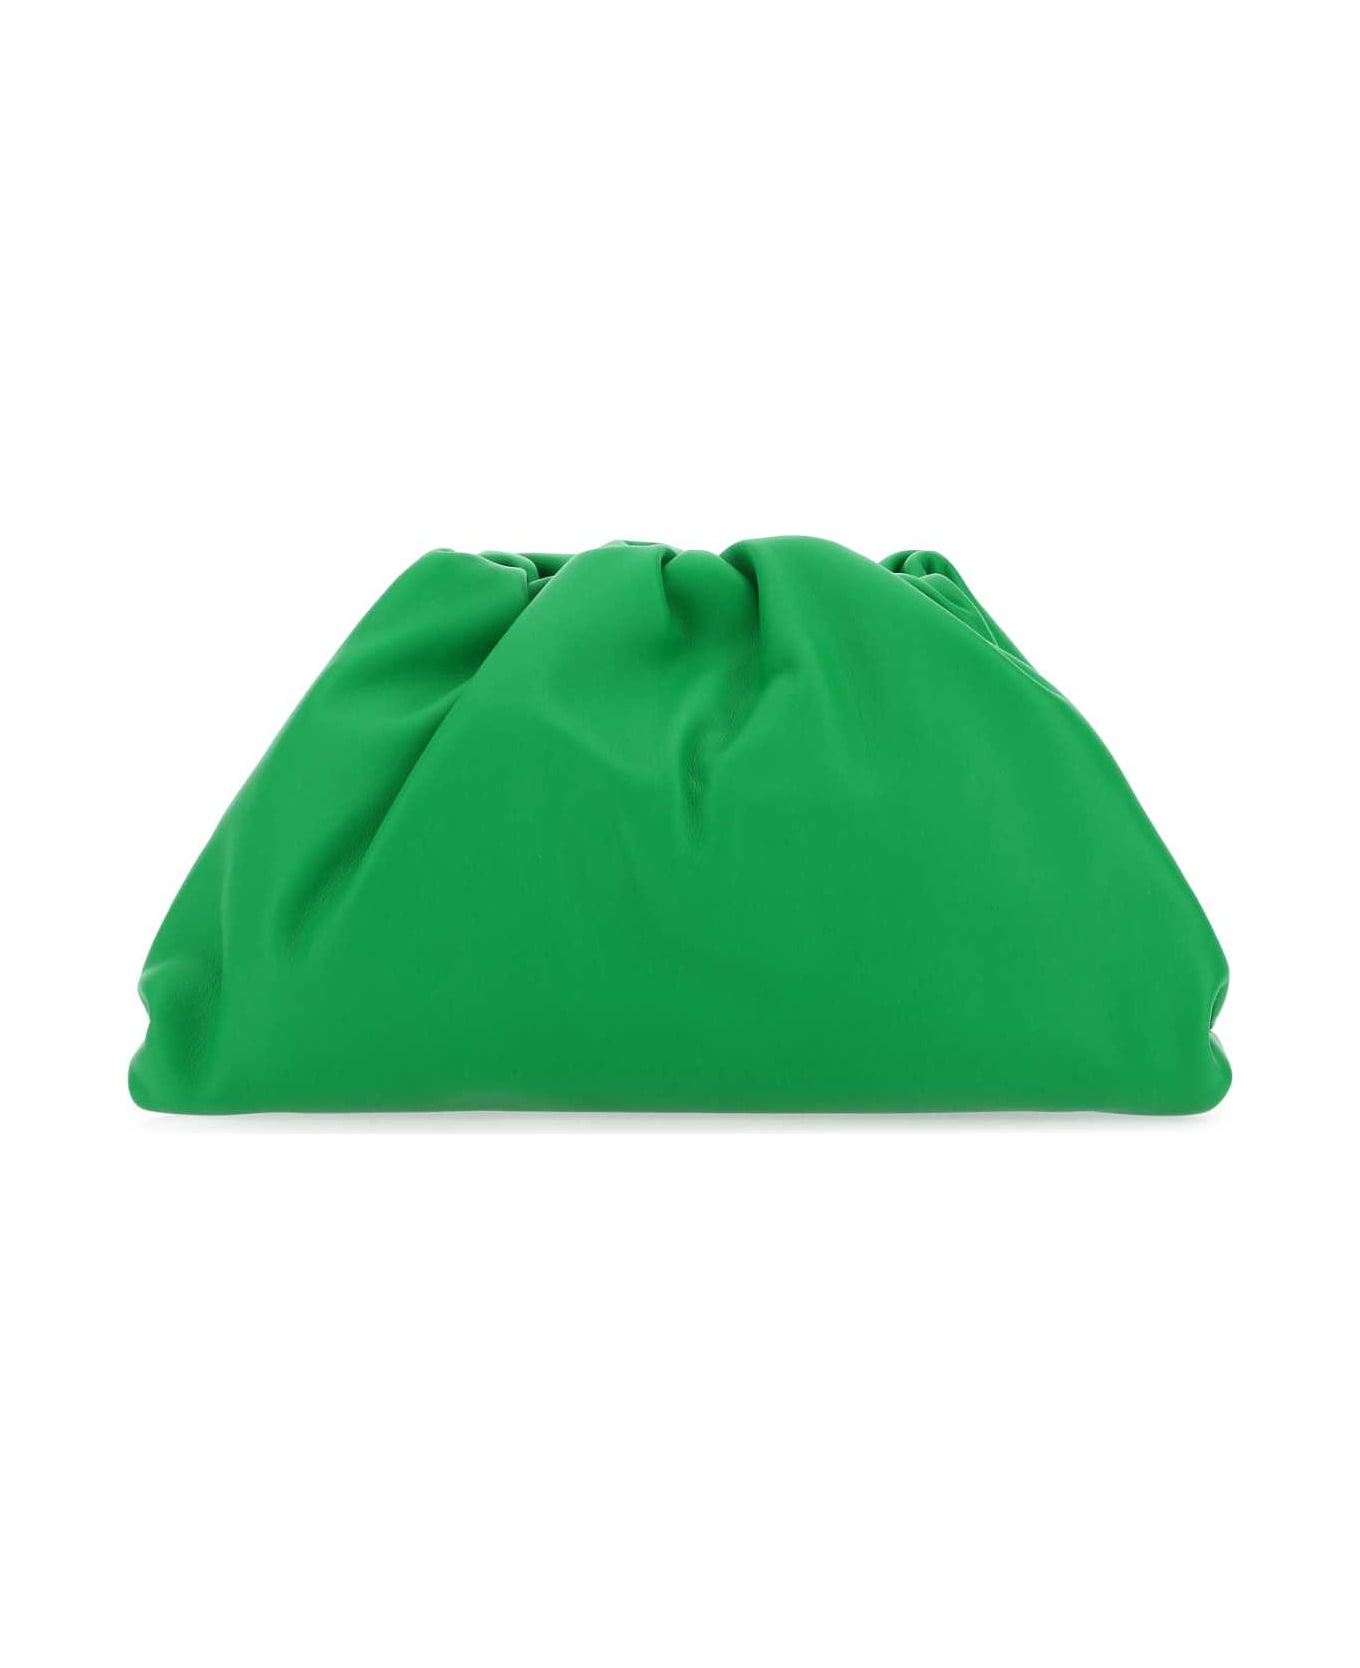 Bottega Veneta Grass Green Nappa Leather Teen Pouch Clutch - 3722 クラッチバッグ